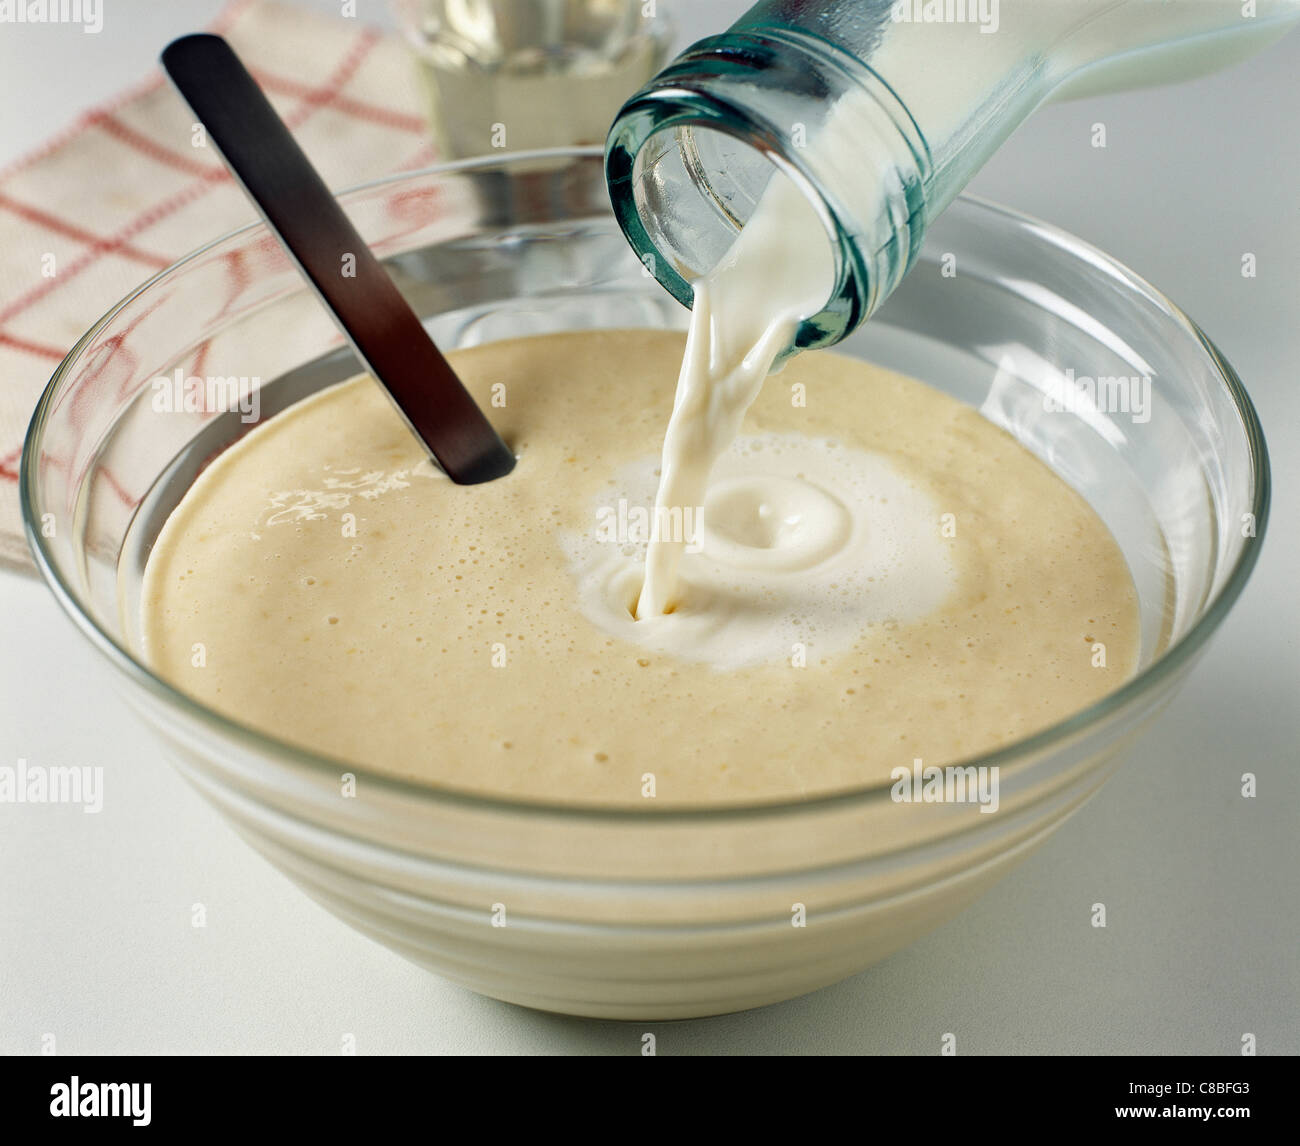 preparing crepe mixture Stock Photo